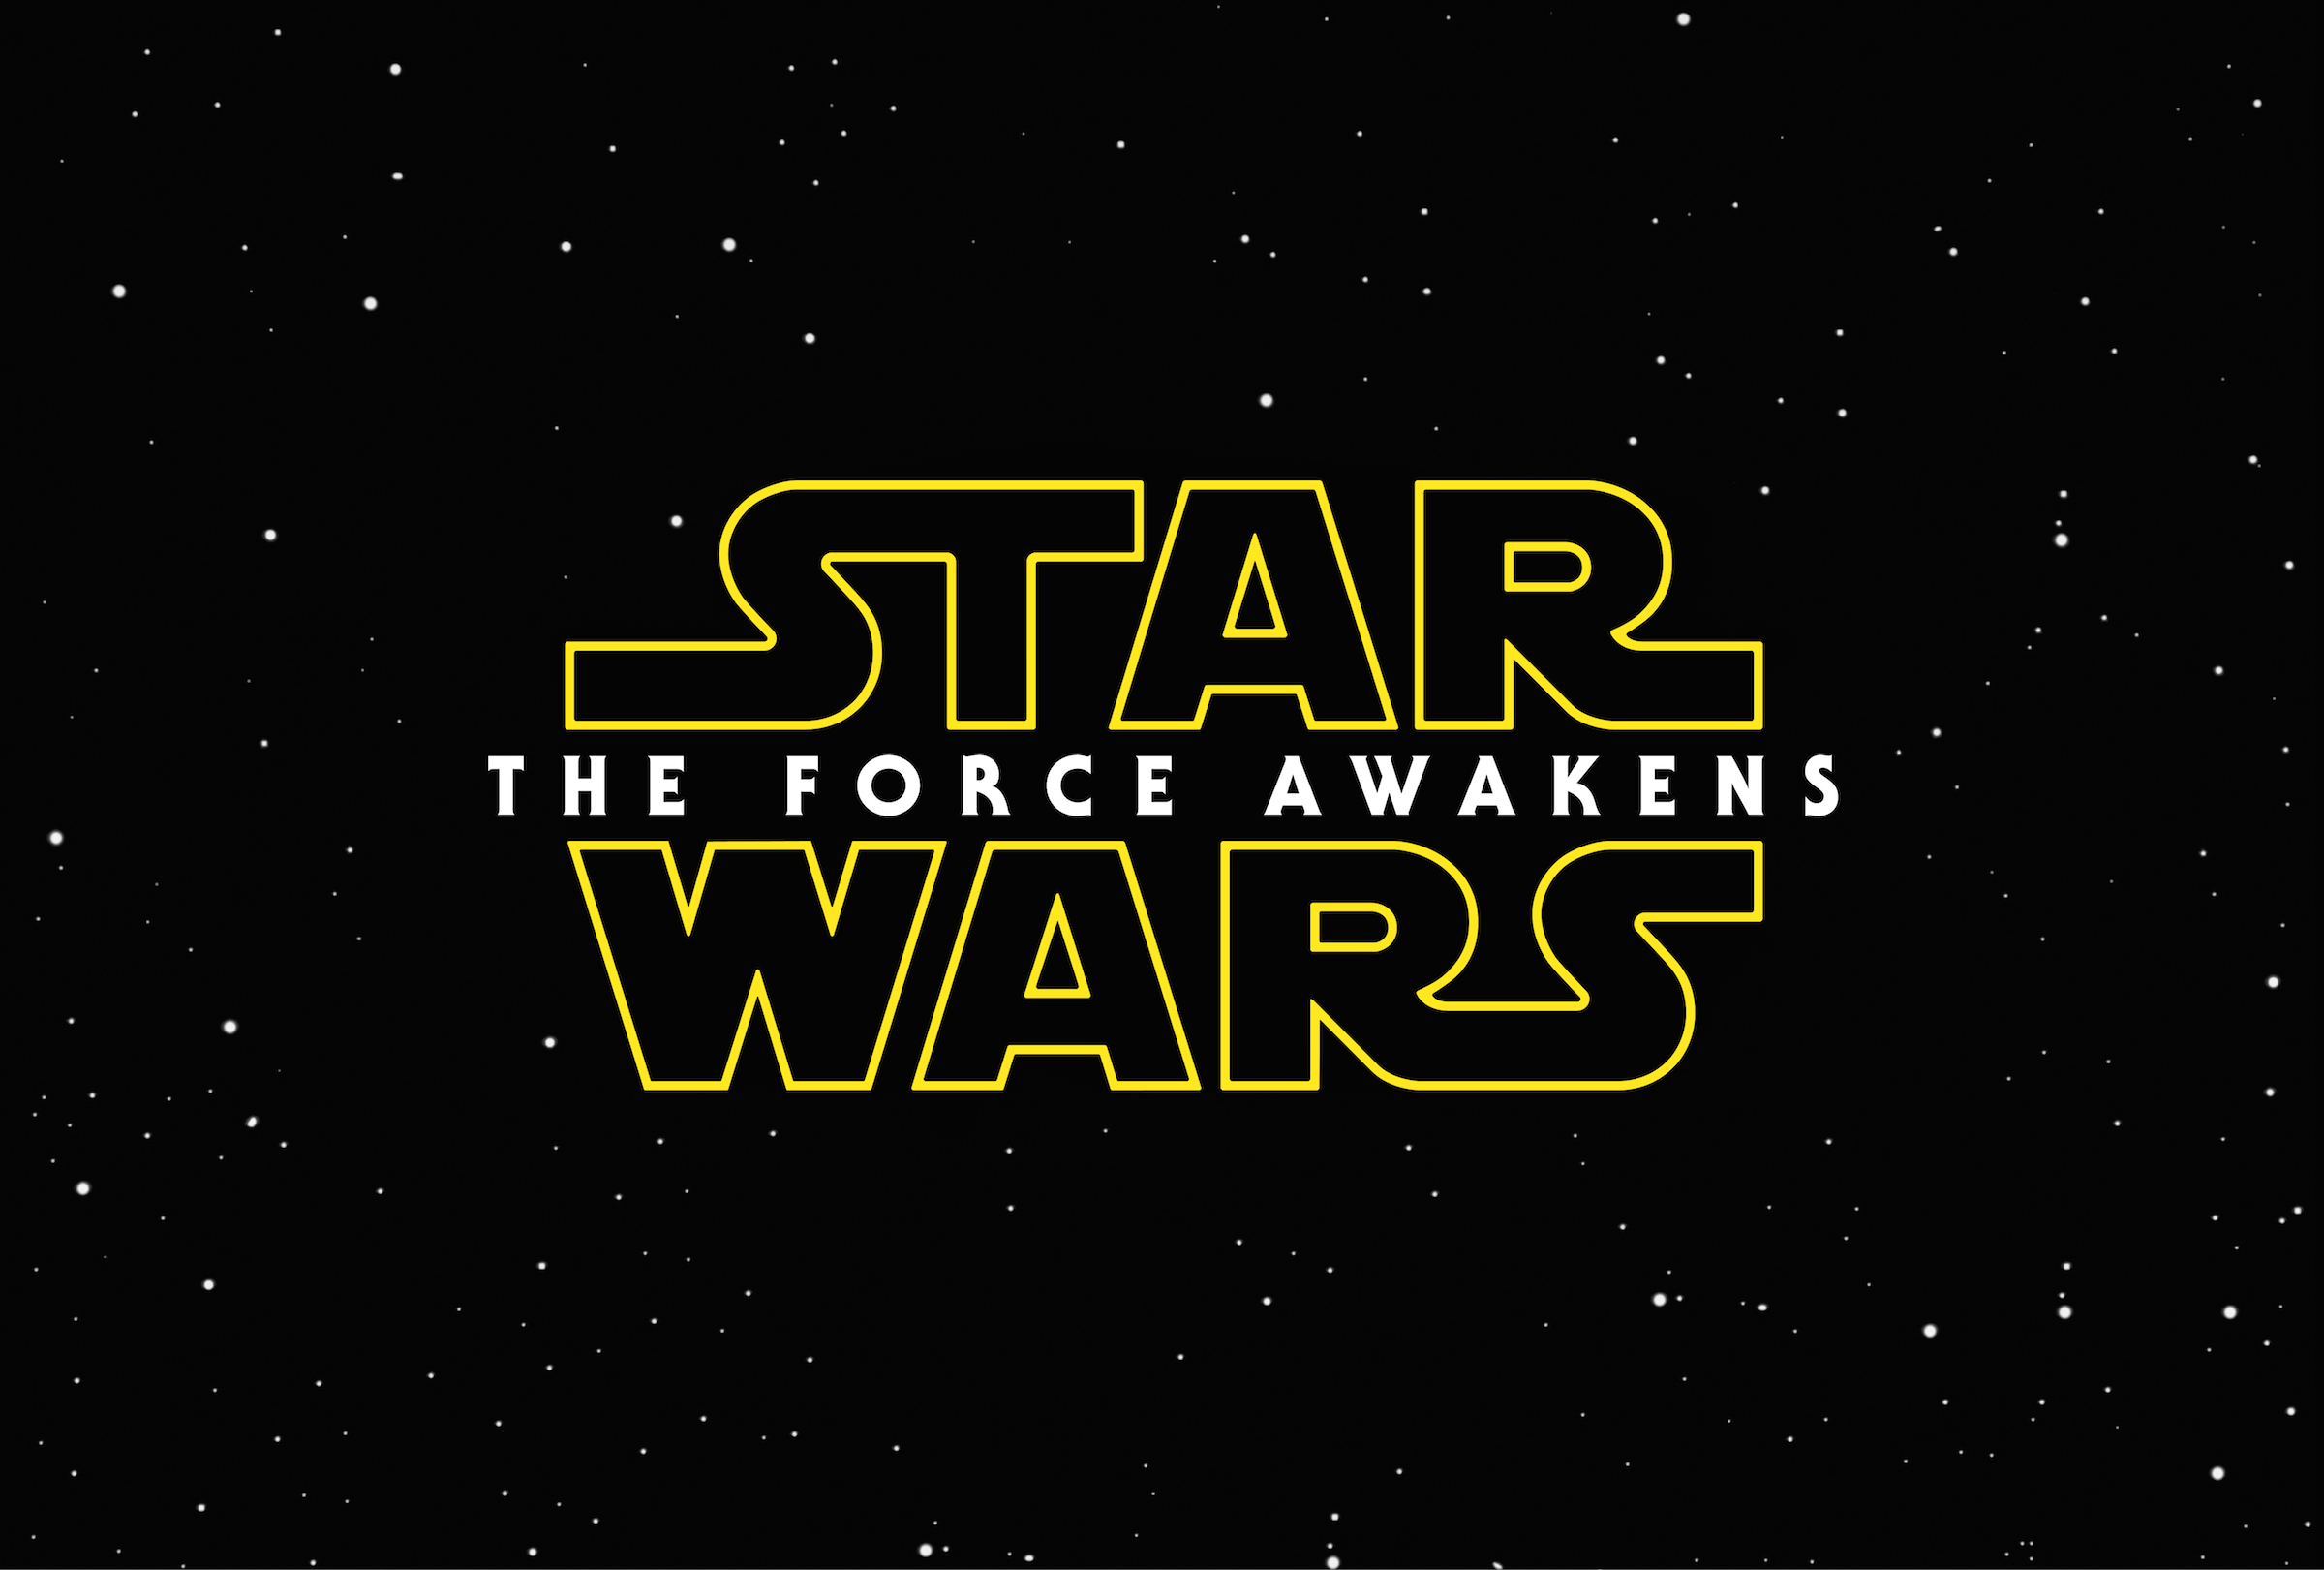 http://vignette2.wikia.nocookie.net/starwars/images/4/49/Star_Wars_The_Force_Awakens.jpg/revision/latest?cb=20150504052358